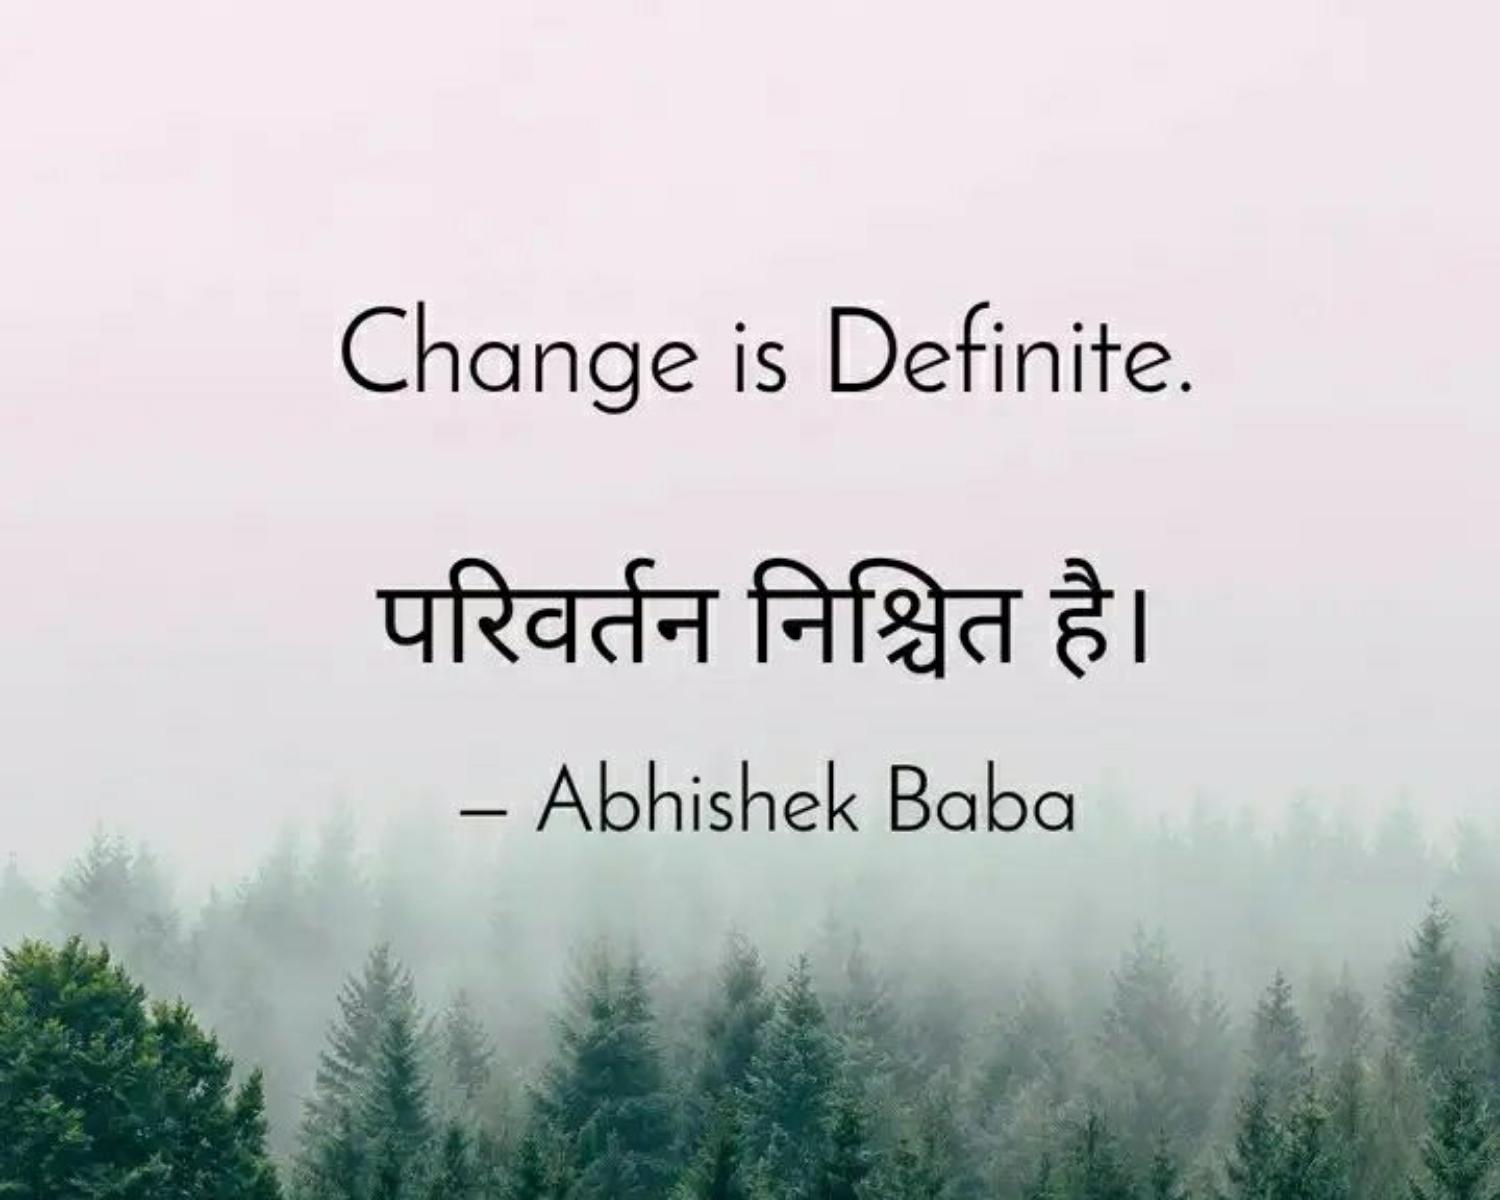 Change is Definite.